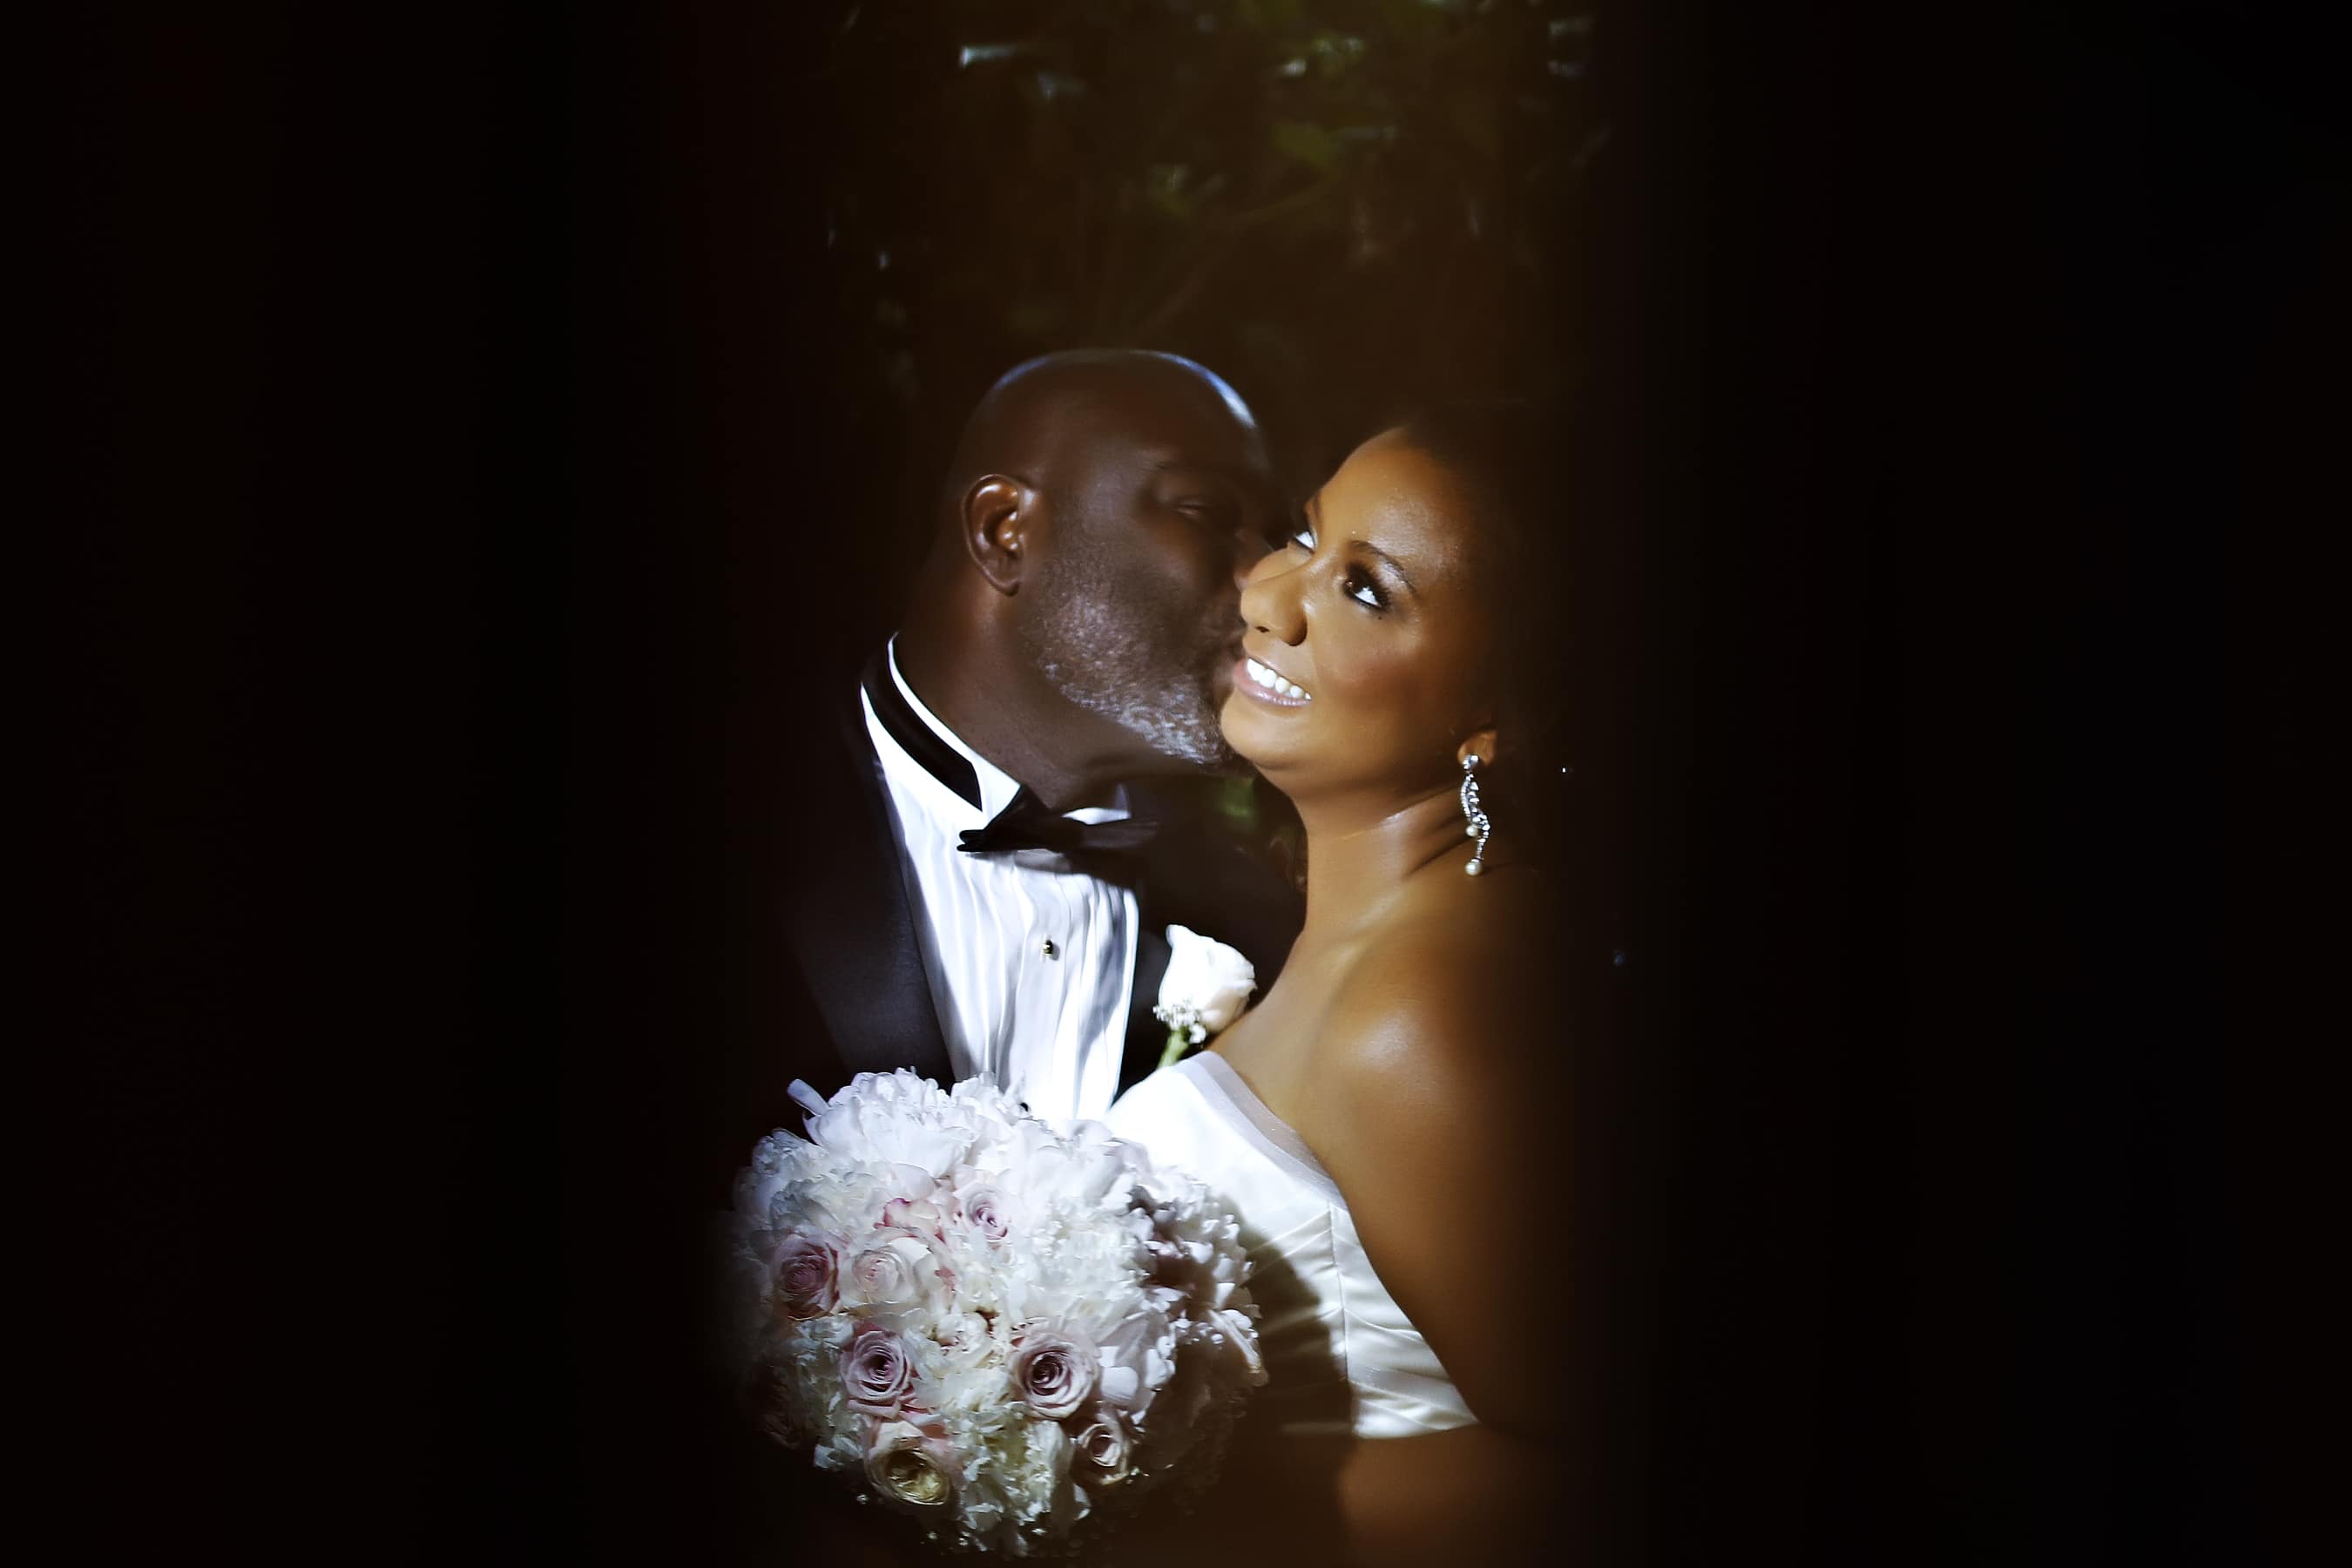 Walter Washington Convention Center Wedding Photographer | Washington DC Wedding Photographer | Sneak Preview:  Rima and Kwasi’s Amazing Ghana Wedding!